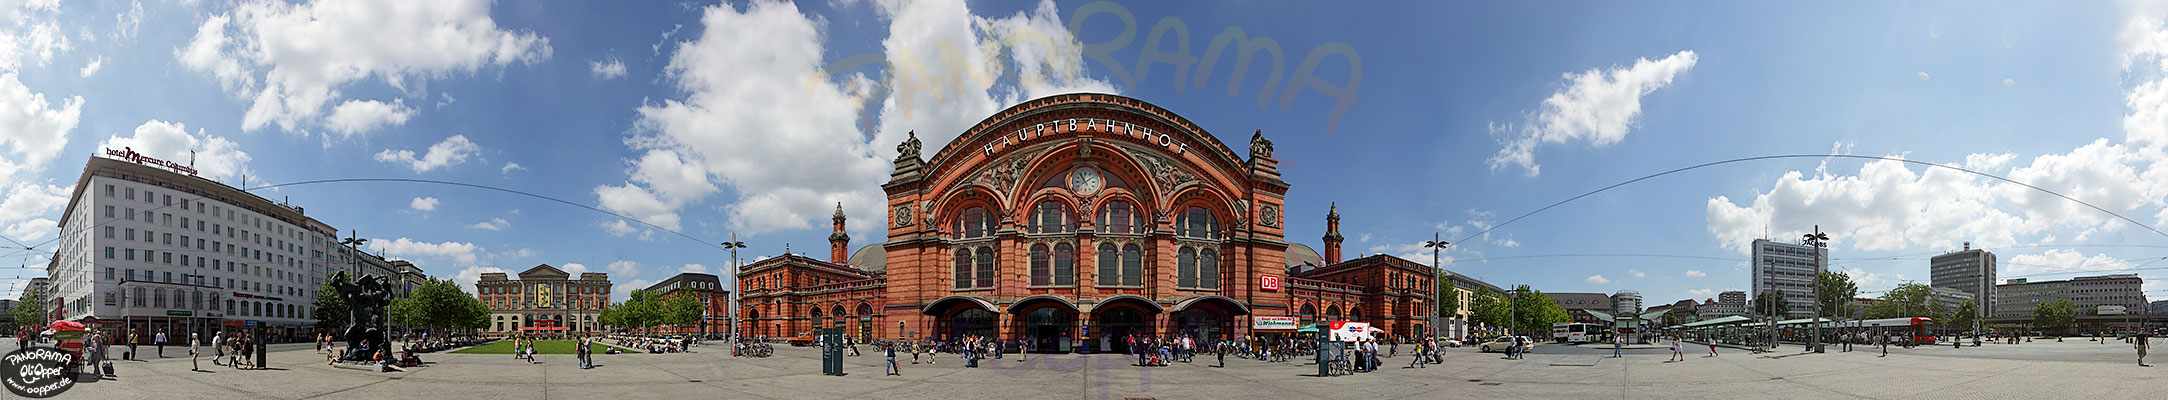 Panorama Bremen - Hauptbahnhof / Bahnhofsplatz - p006 - (c) by Oliver Opper